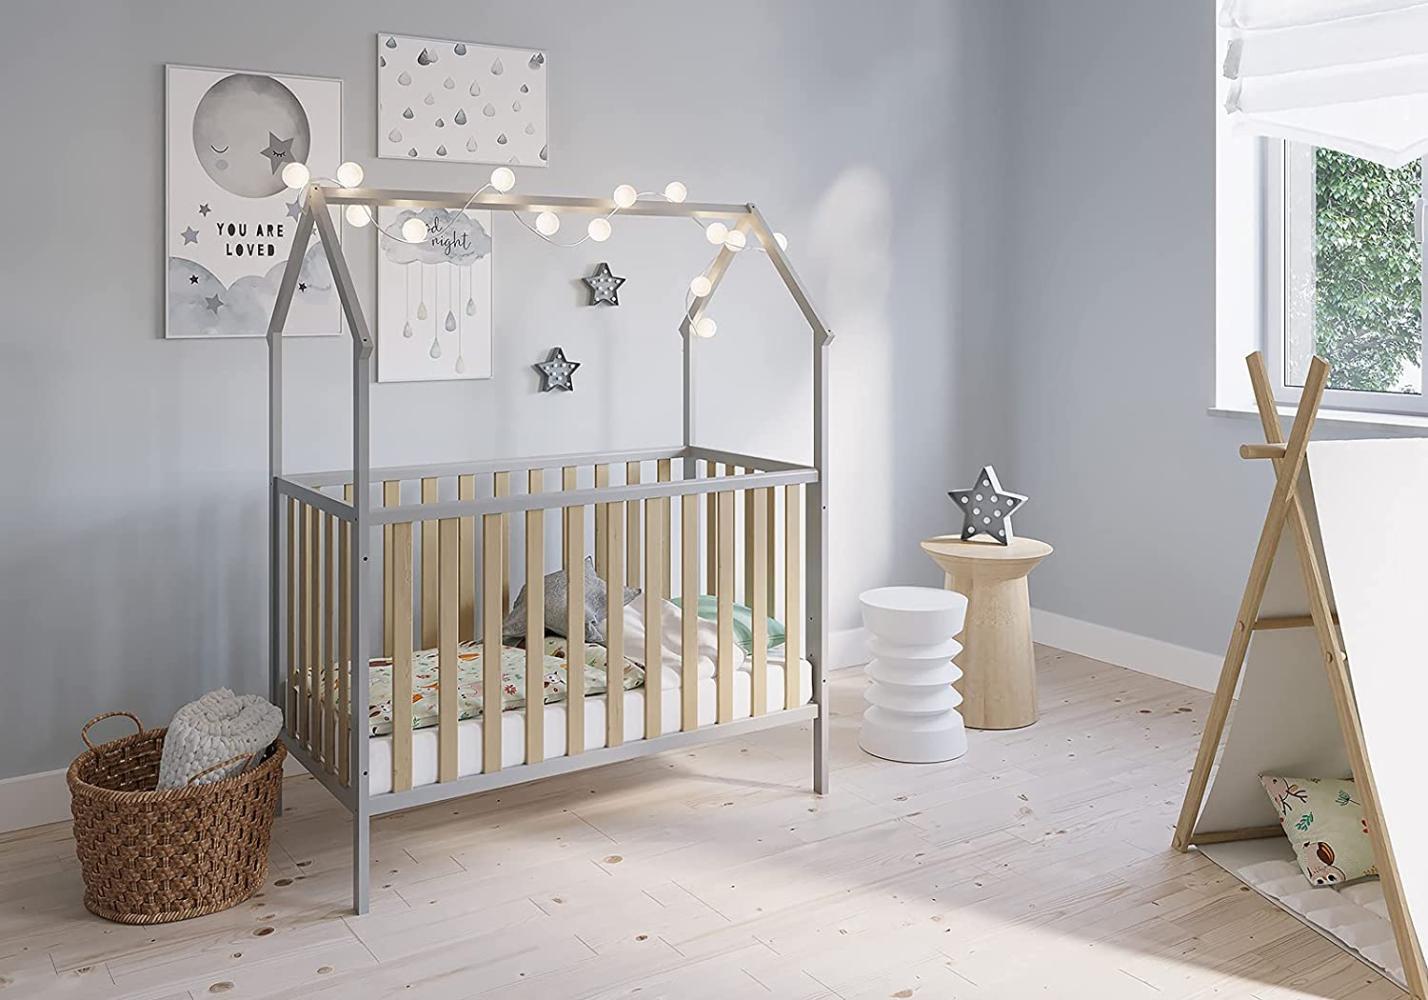 FabiMax 'Schlafmütze' Kinderbett, 60 x 120 cm, grau/natur, Kiefer massiv, 3-fach höhenverstellbar, umbaubar Bild 1